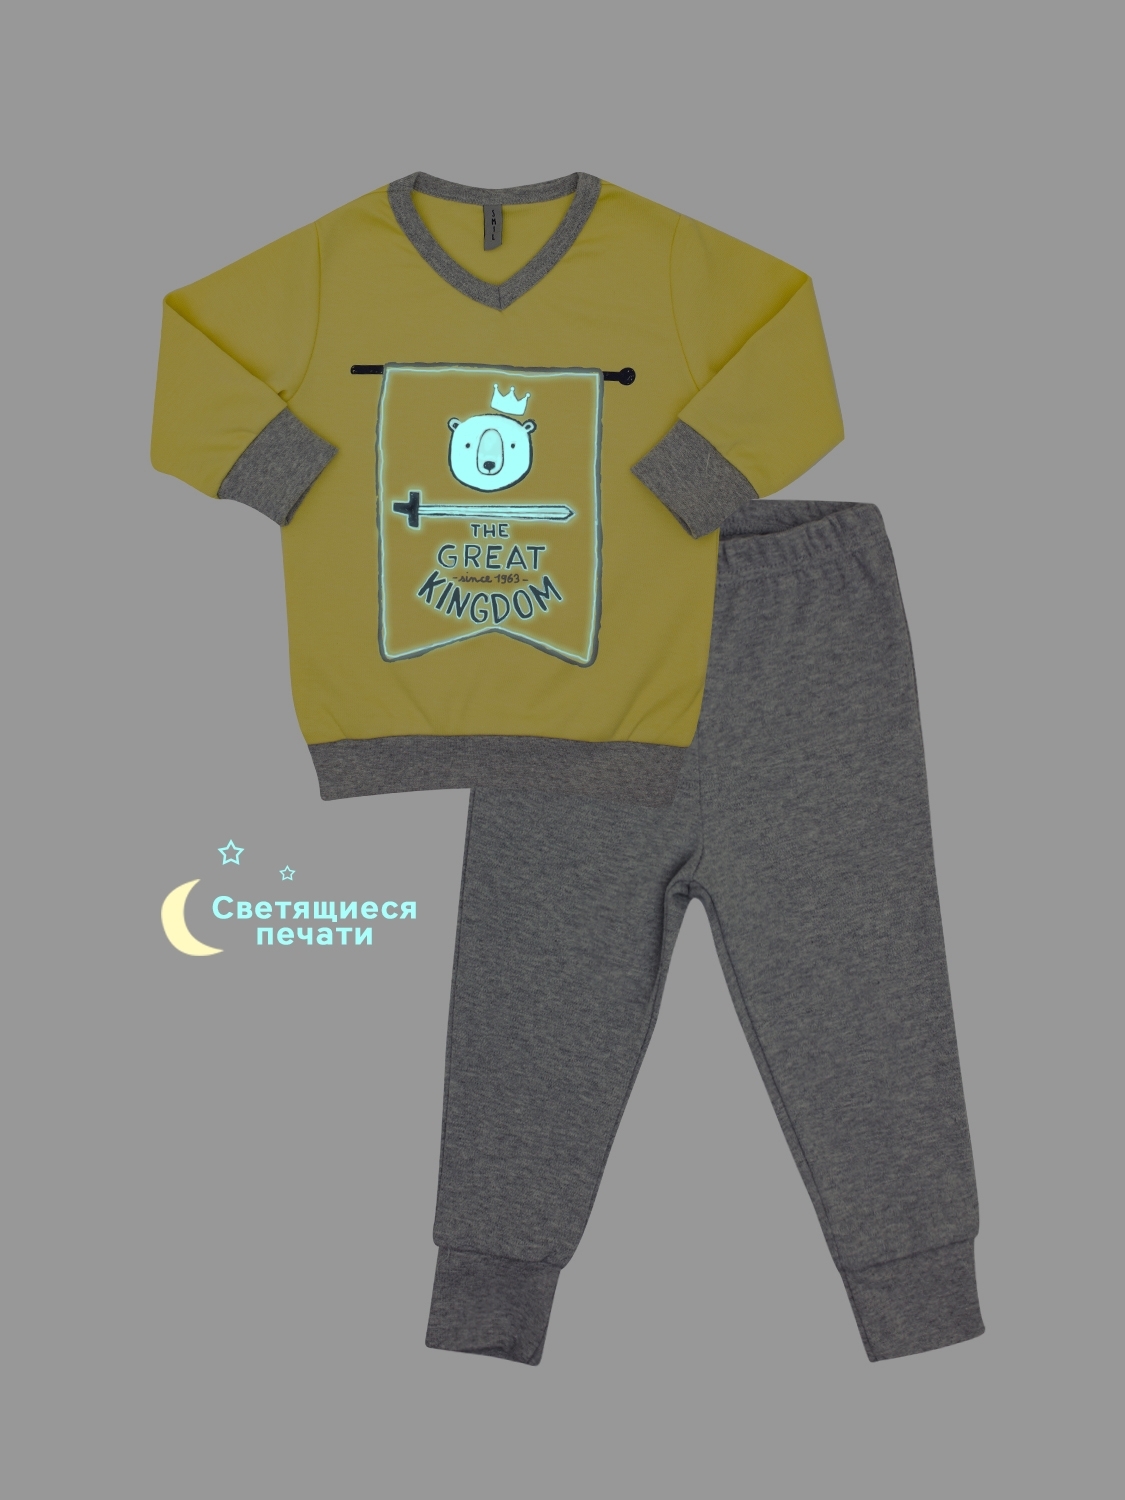 Пижама для мальчика, арт.104246, возраст от 12 до 18 месяцев